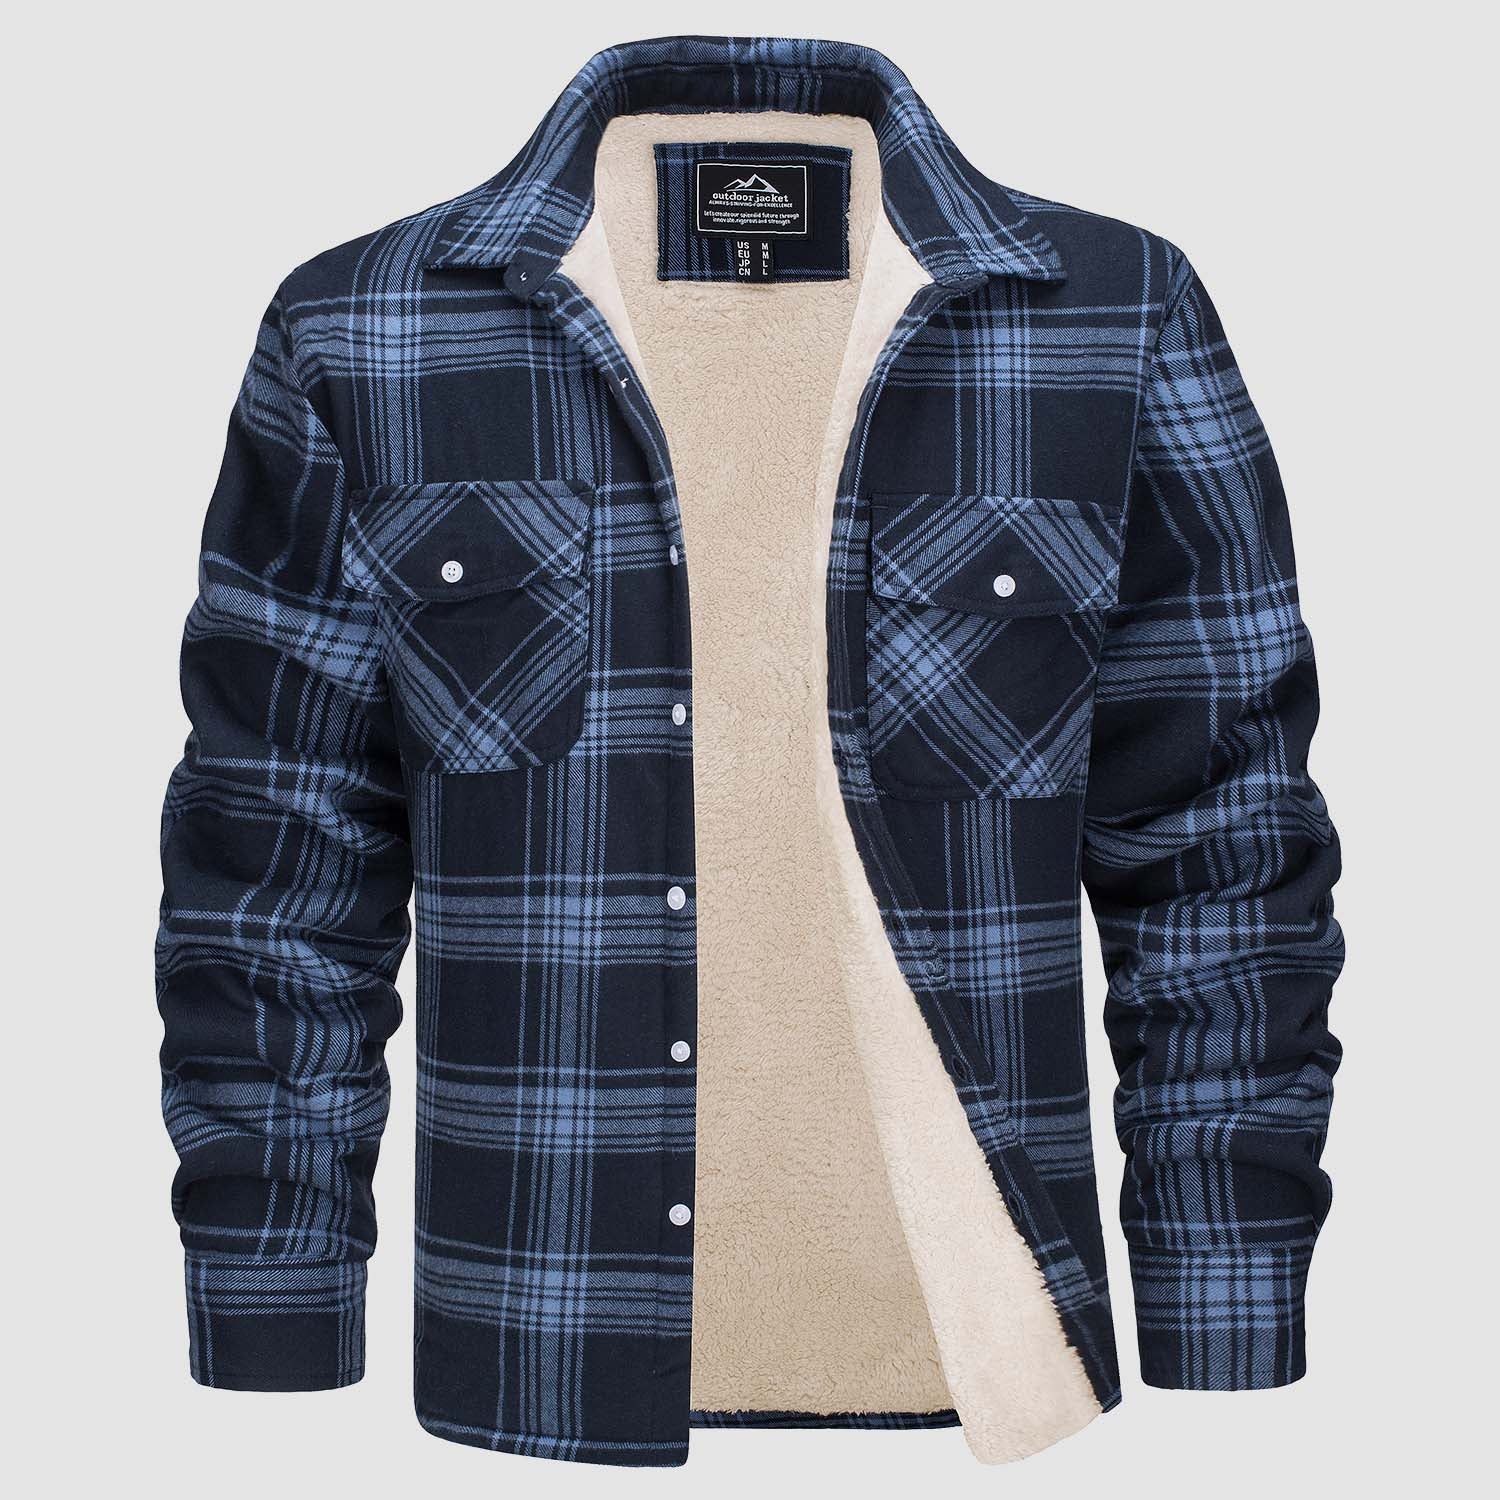 Men's Flannel Shirt Jacket Fleece Lined Plaid Coat Full Zip Up Hoodie  Winter Outwear,Mens Sherpa Lined Zipper Hooded Plaid Shirt Jacket